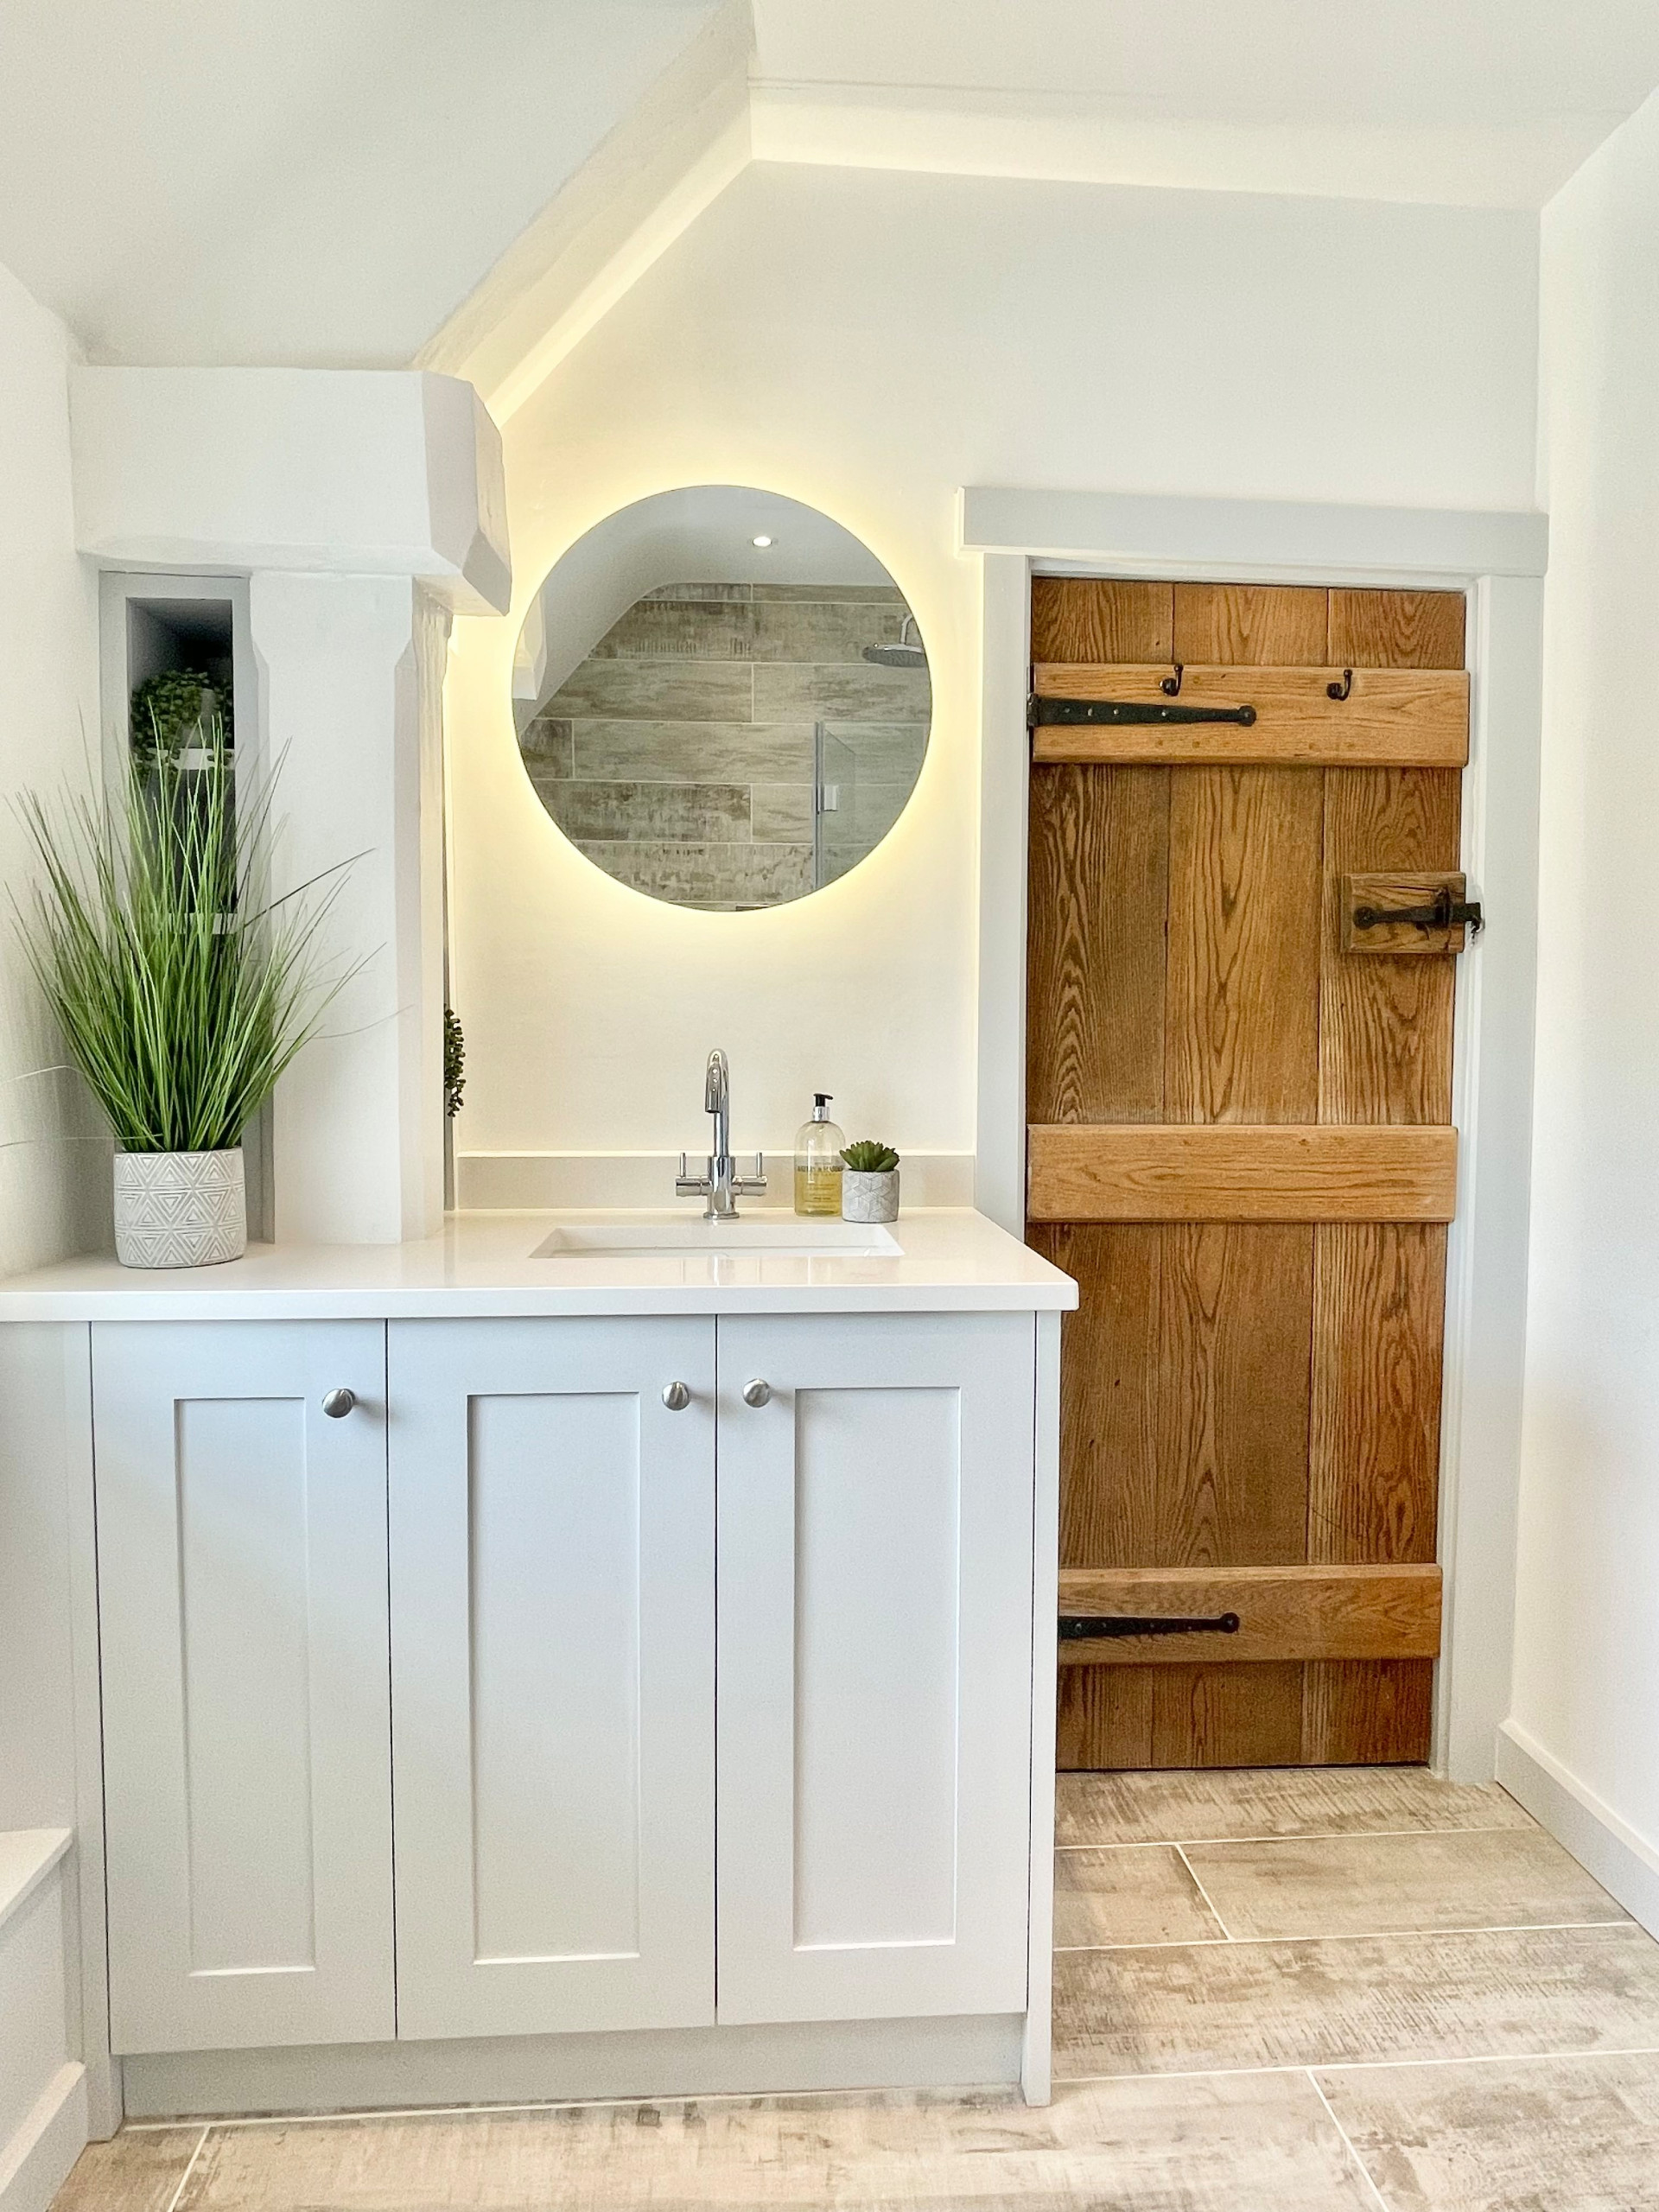 Oxfordshire Cottage Bathrooms & Laundry